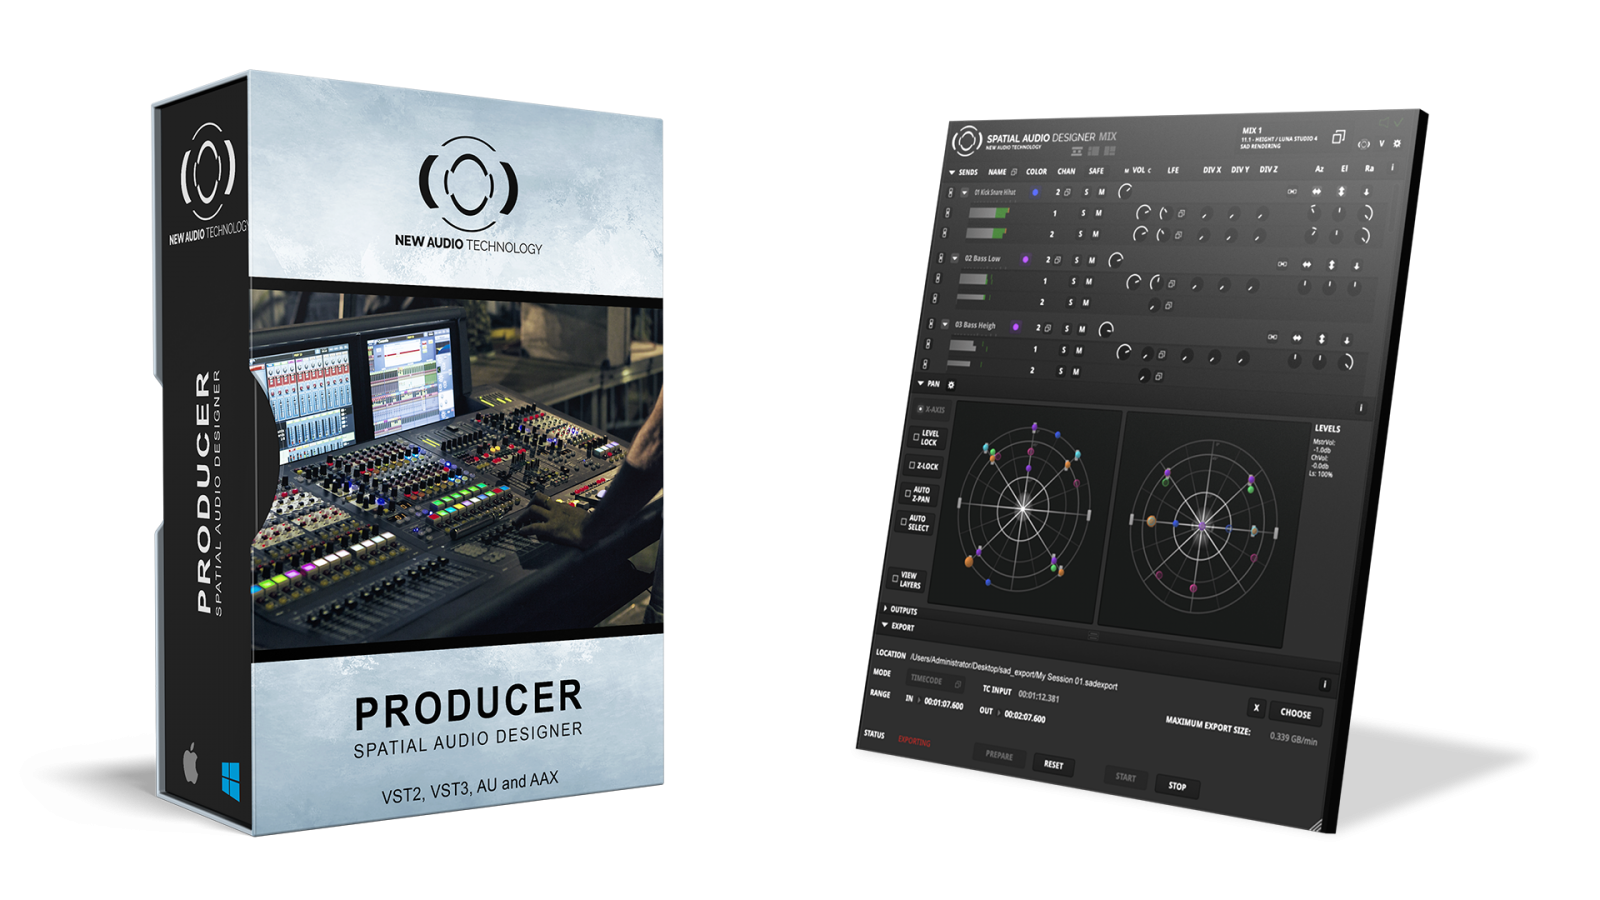 New Audio Technology Spatial Audio Designer - Producer